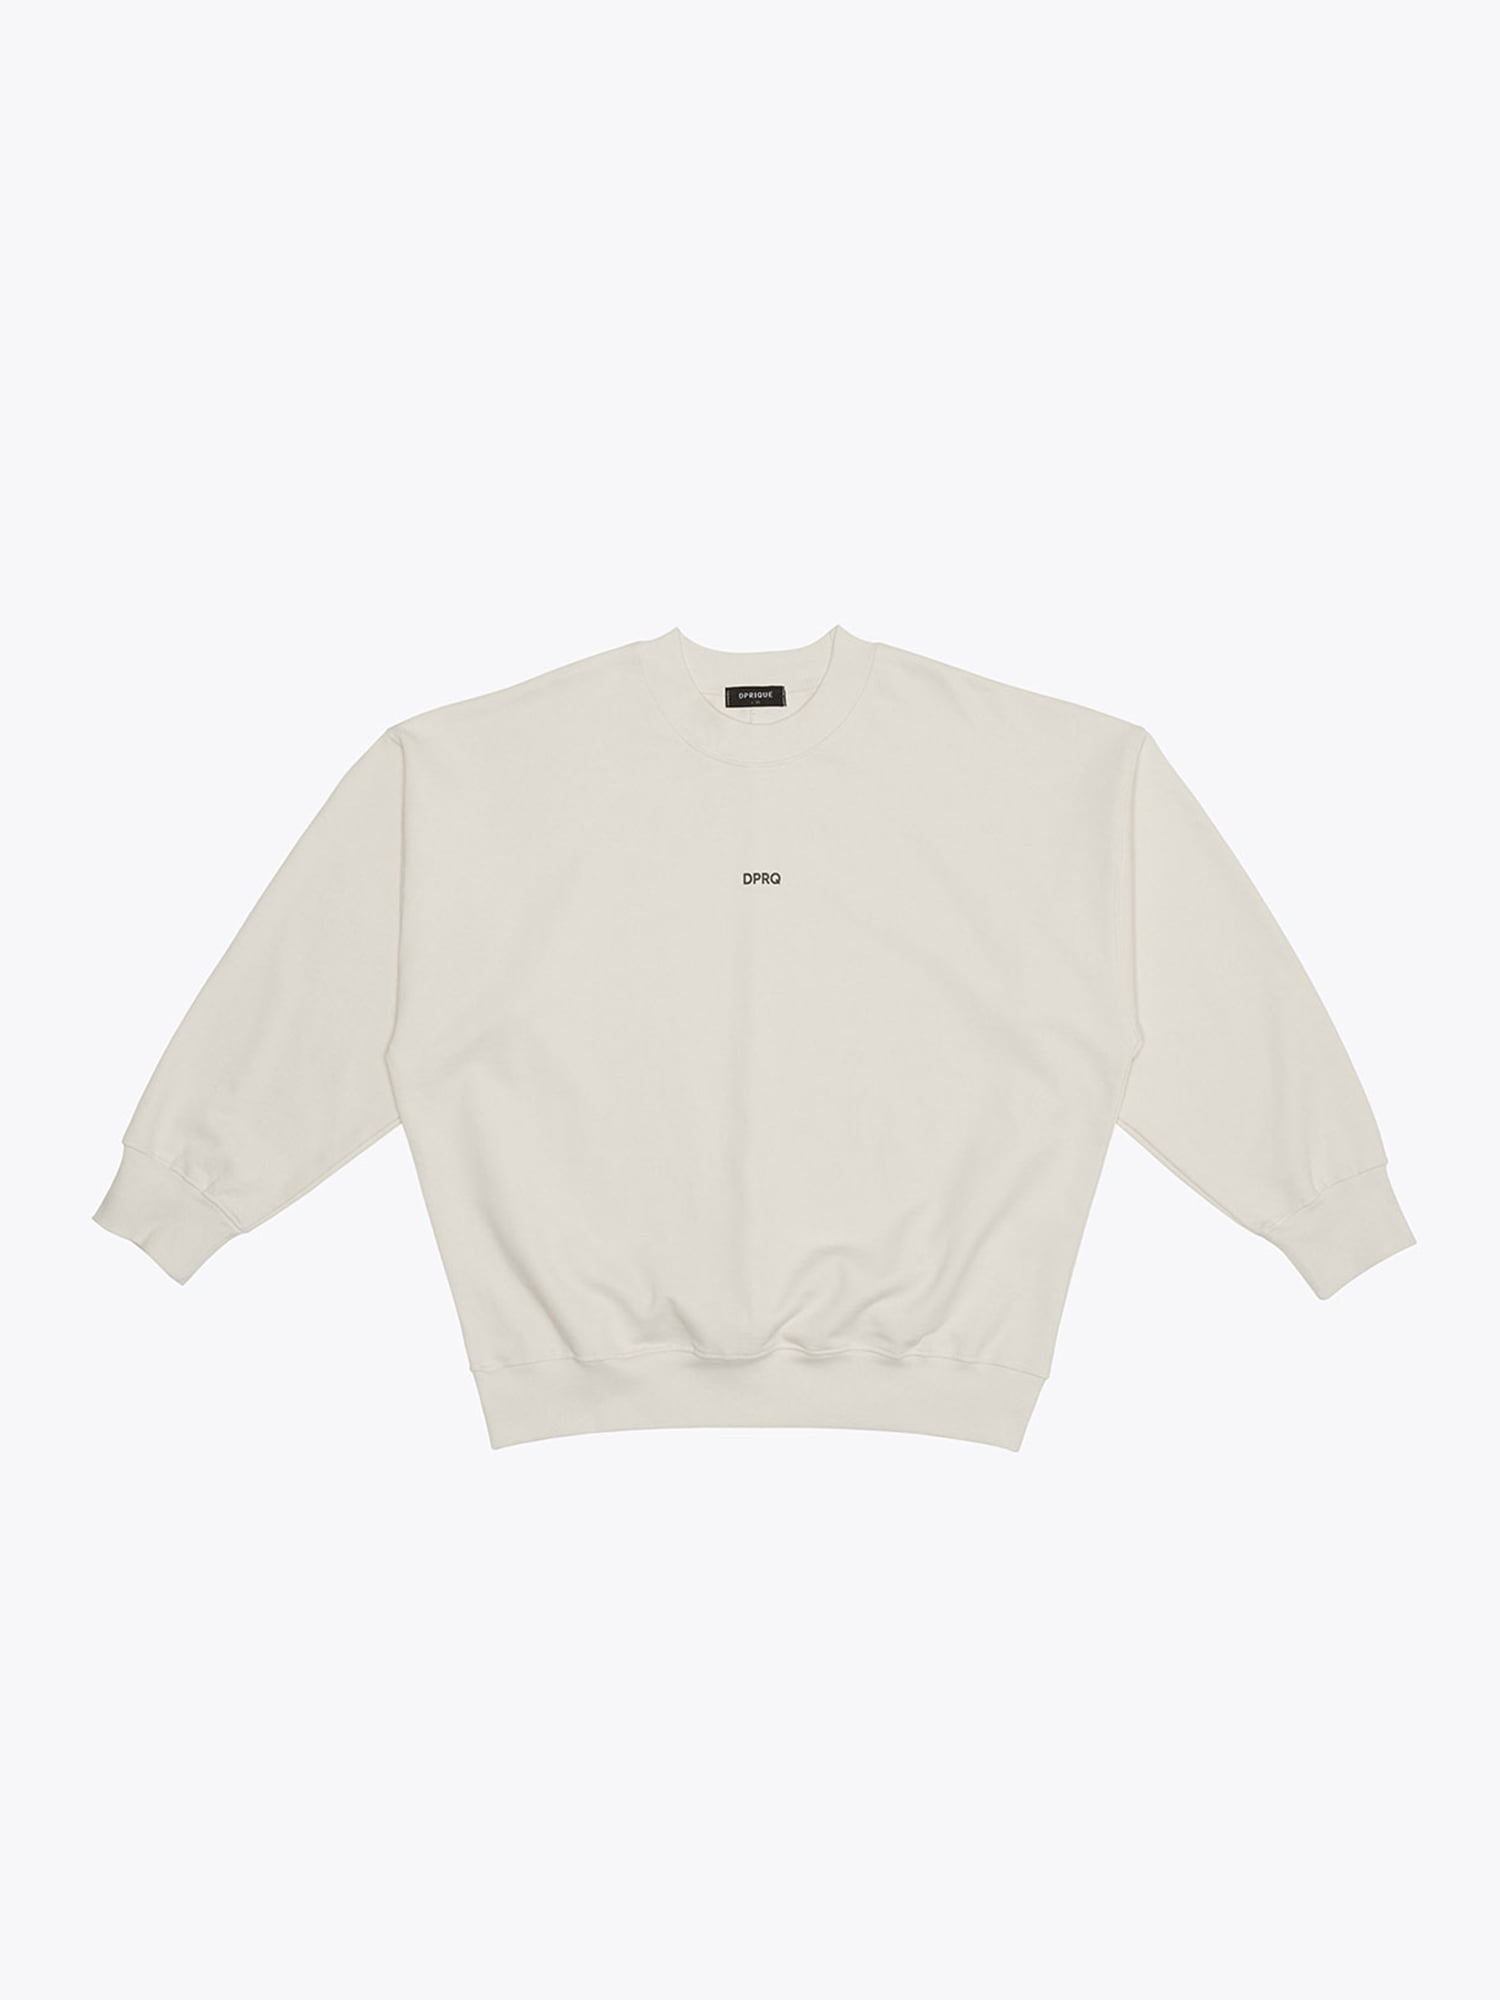 DPRQ Sweatshirt - Ivory